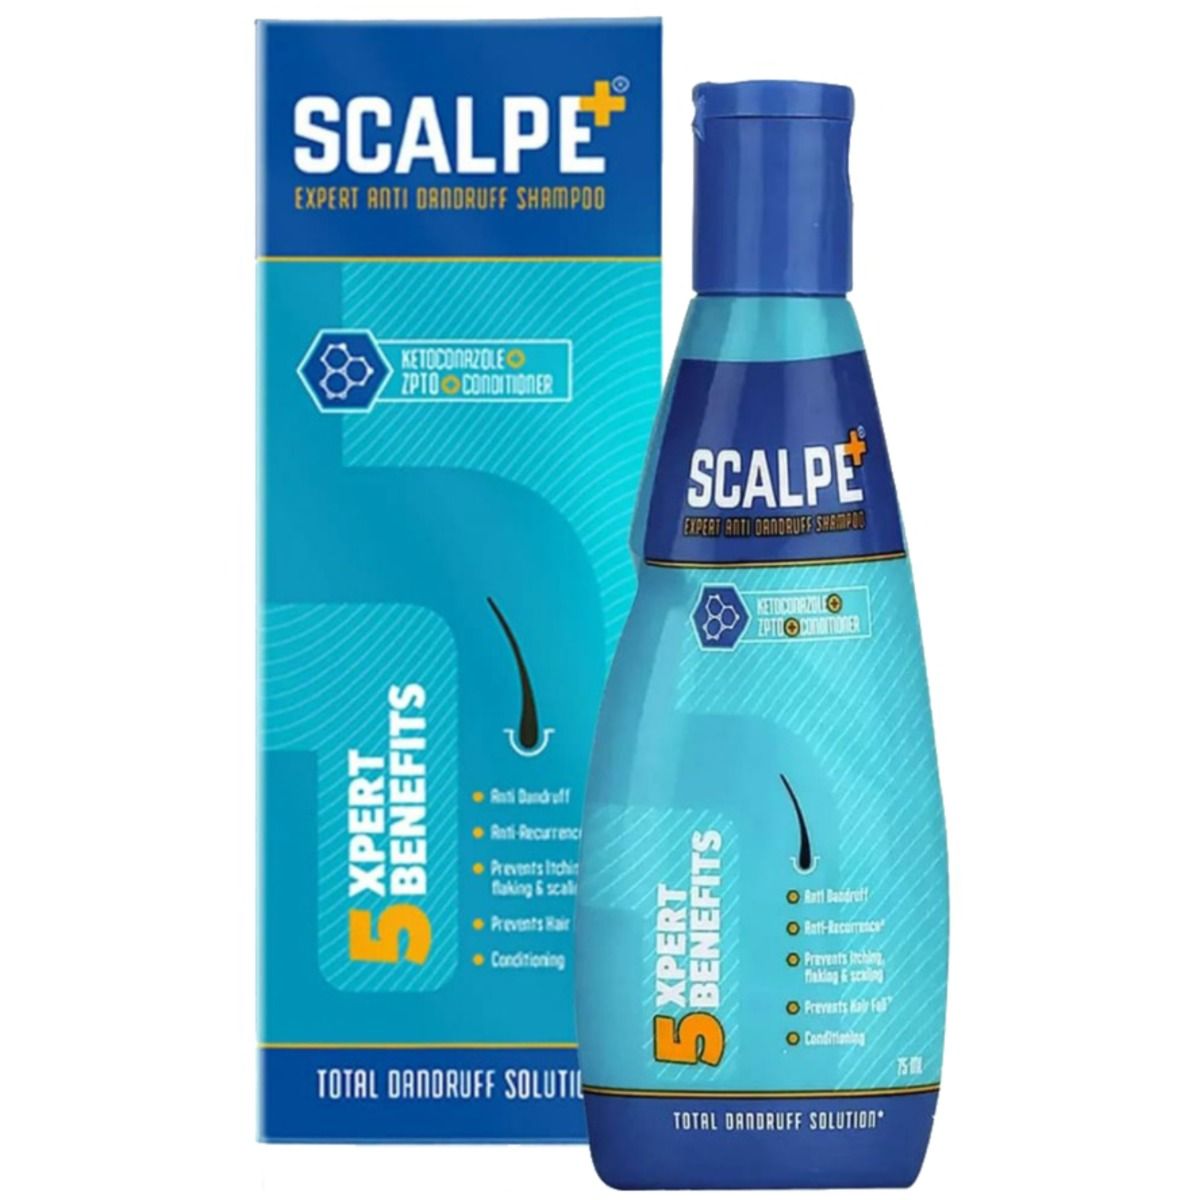 Buy Scalpe Plus Expert Anti Dandruff Shampoo, 75 ml Online